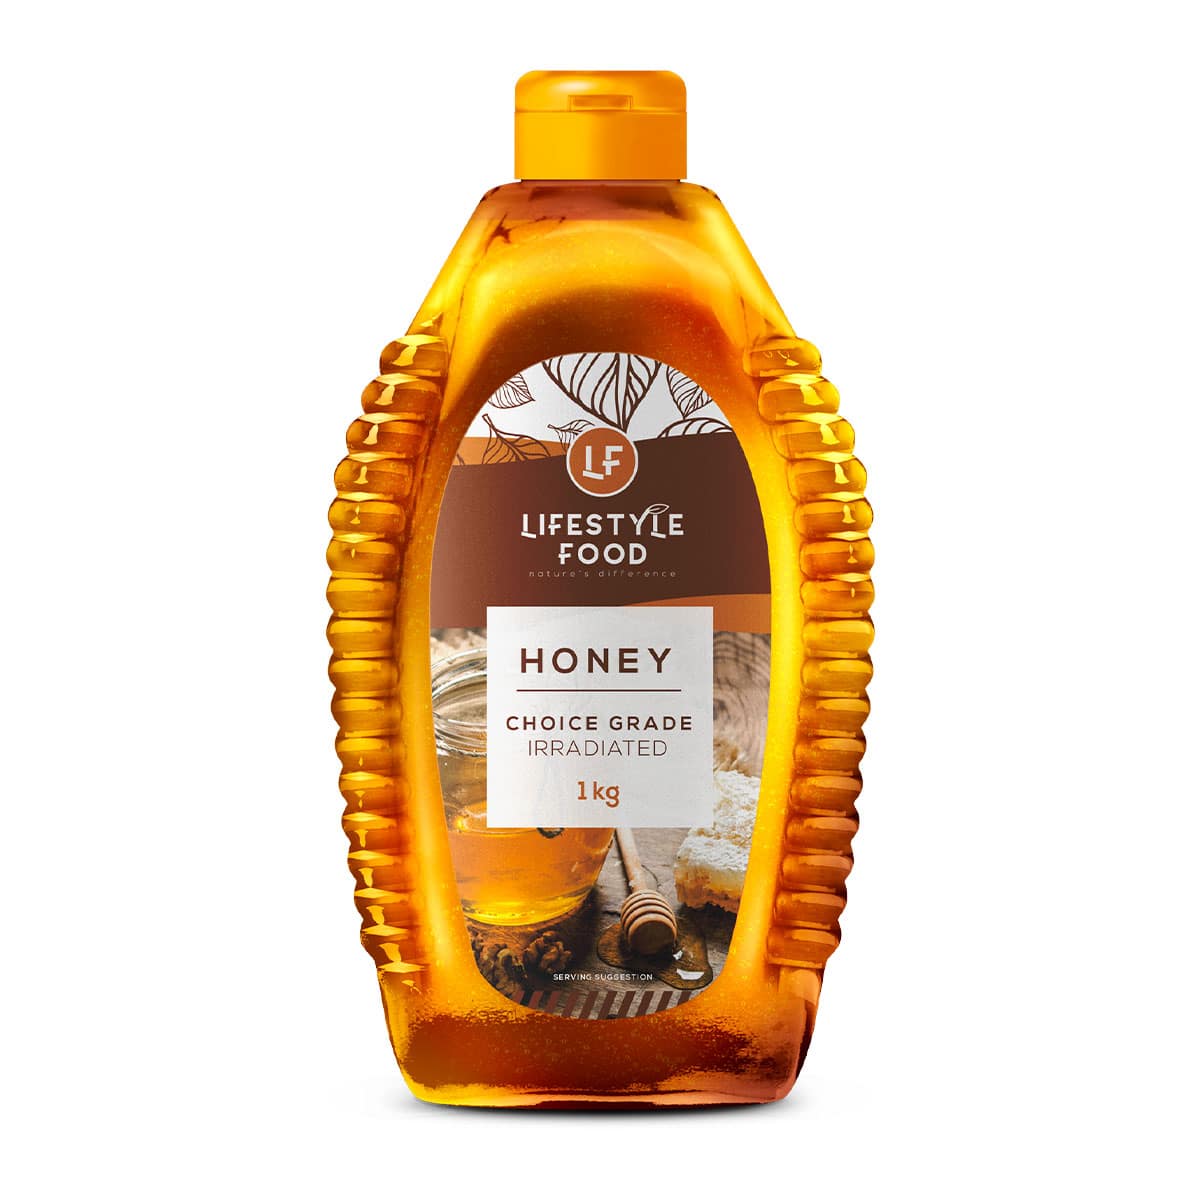 Lifestyle Food Honey Choice Grade Irradiated – 1kg